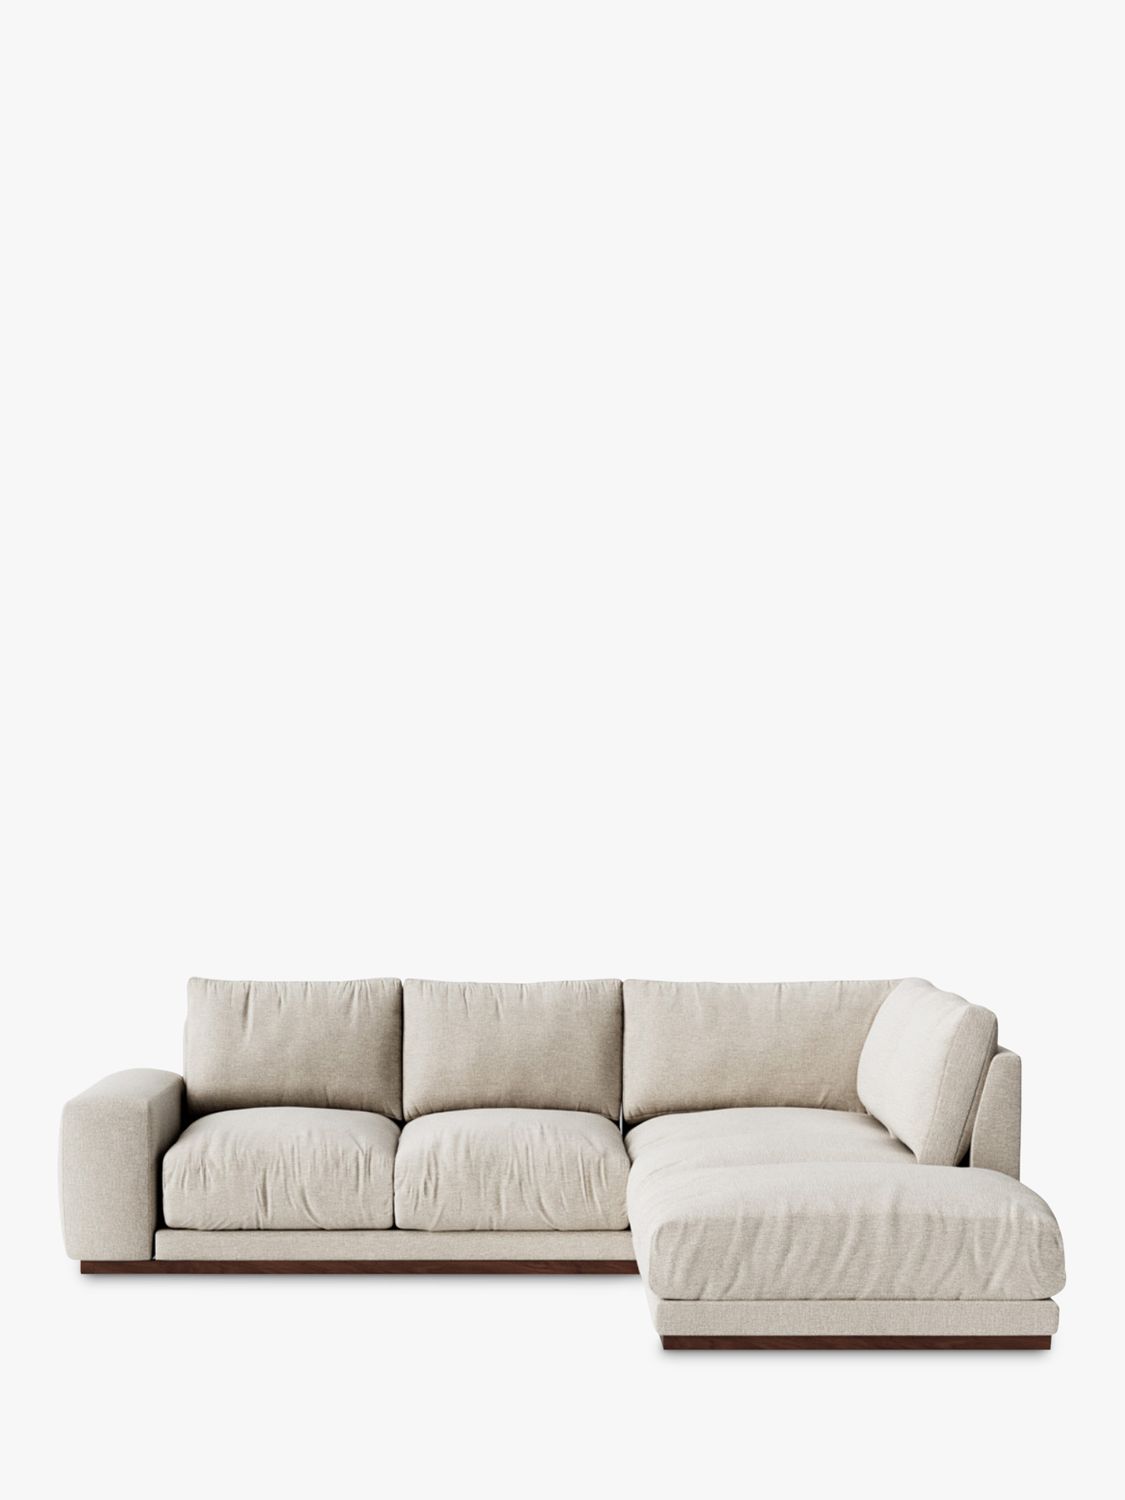 Photo of Swoon denver grand 4 seater rhf corner end sofa